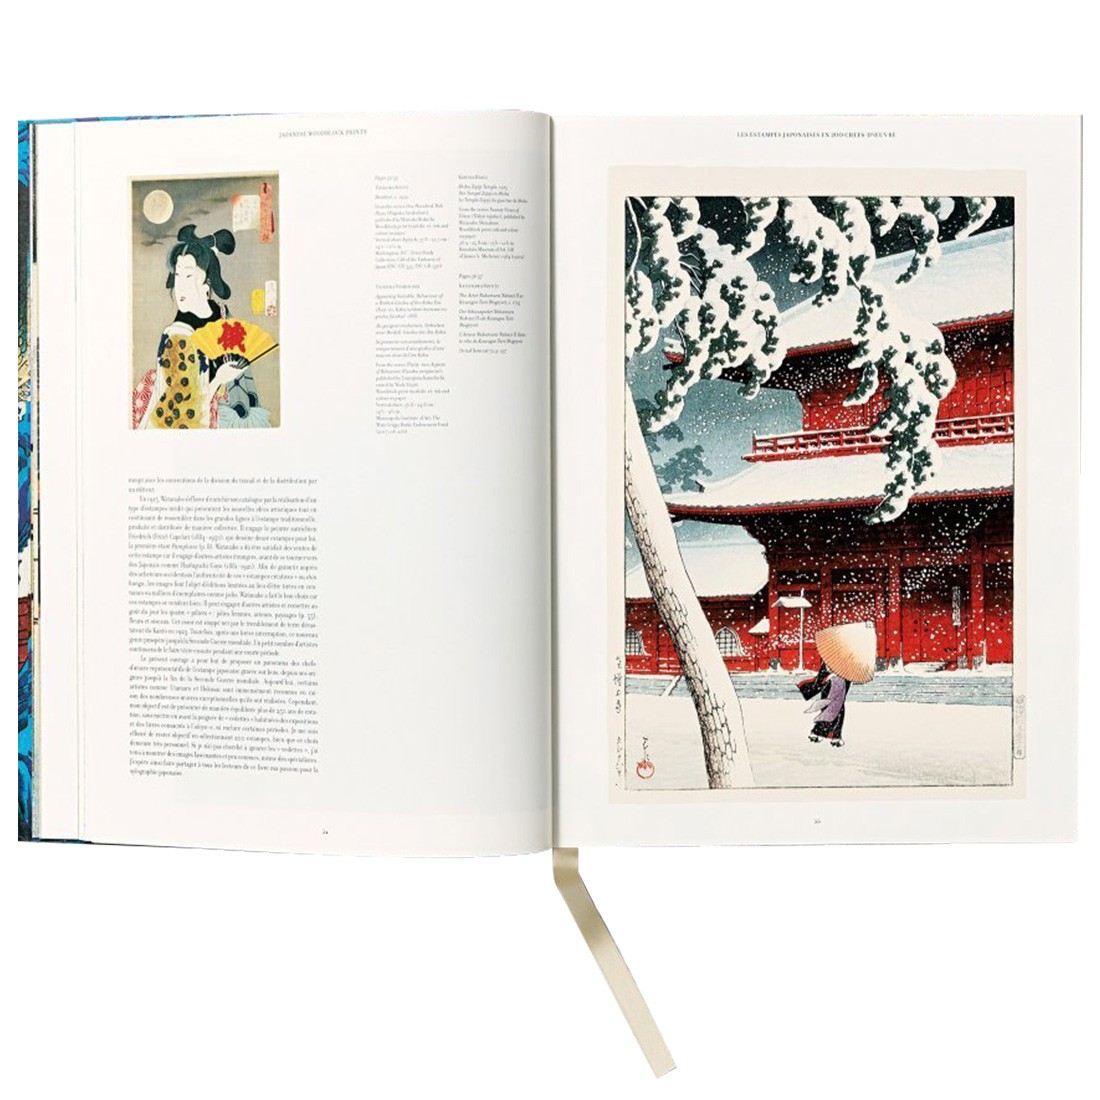 TASCHEN Books: Japanese Woodblock Prints